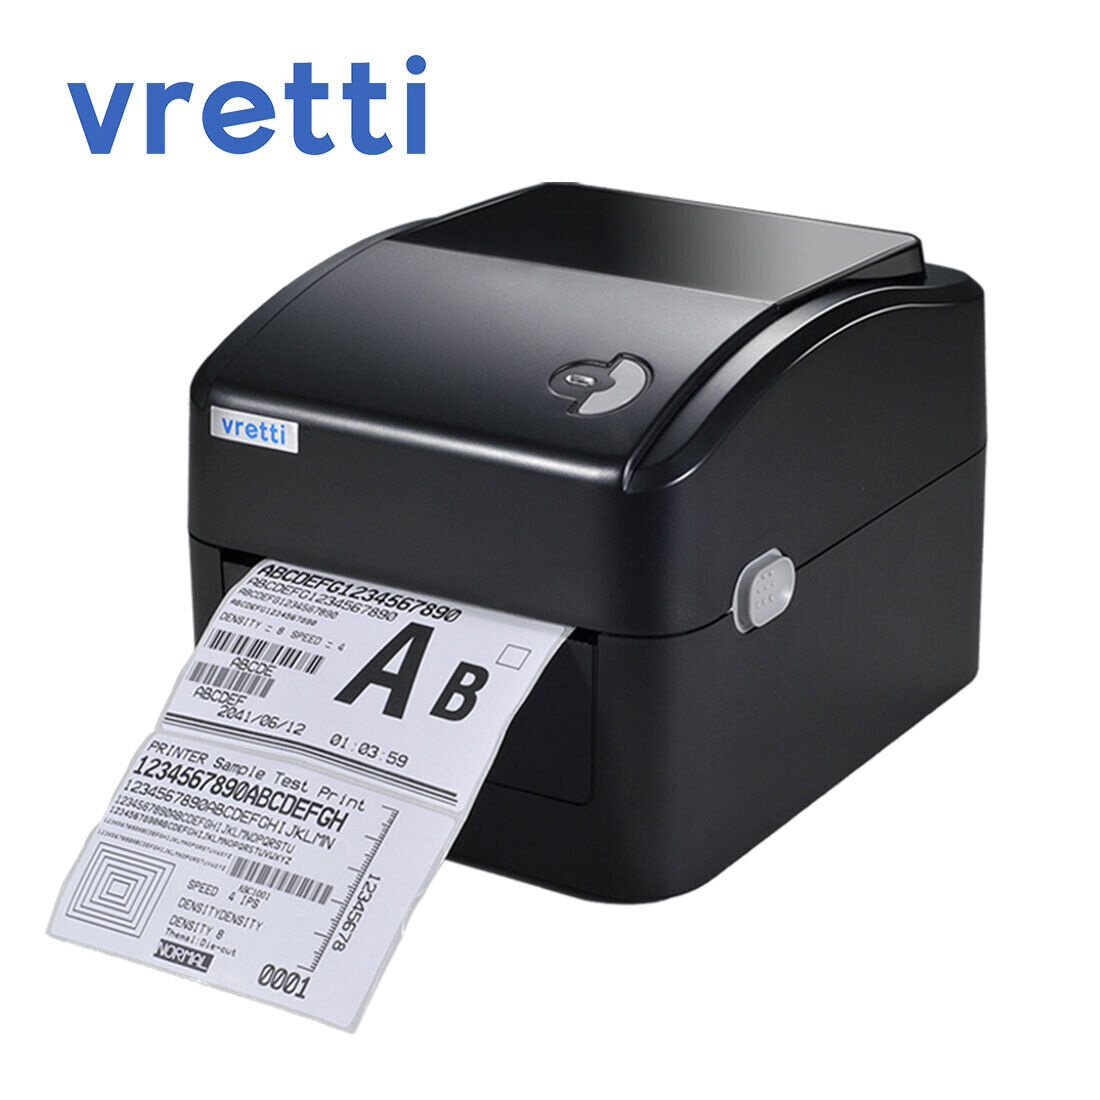 VRETTI Barcode Printer Thermal Label Printer 4x6 USB Printing For USPS,Etsy,eBay